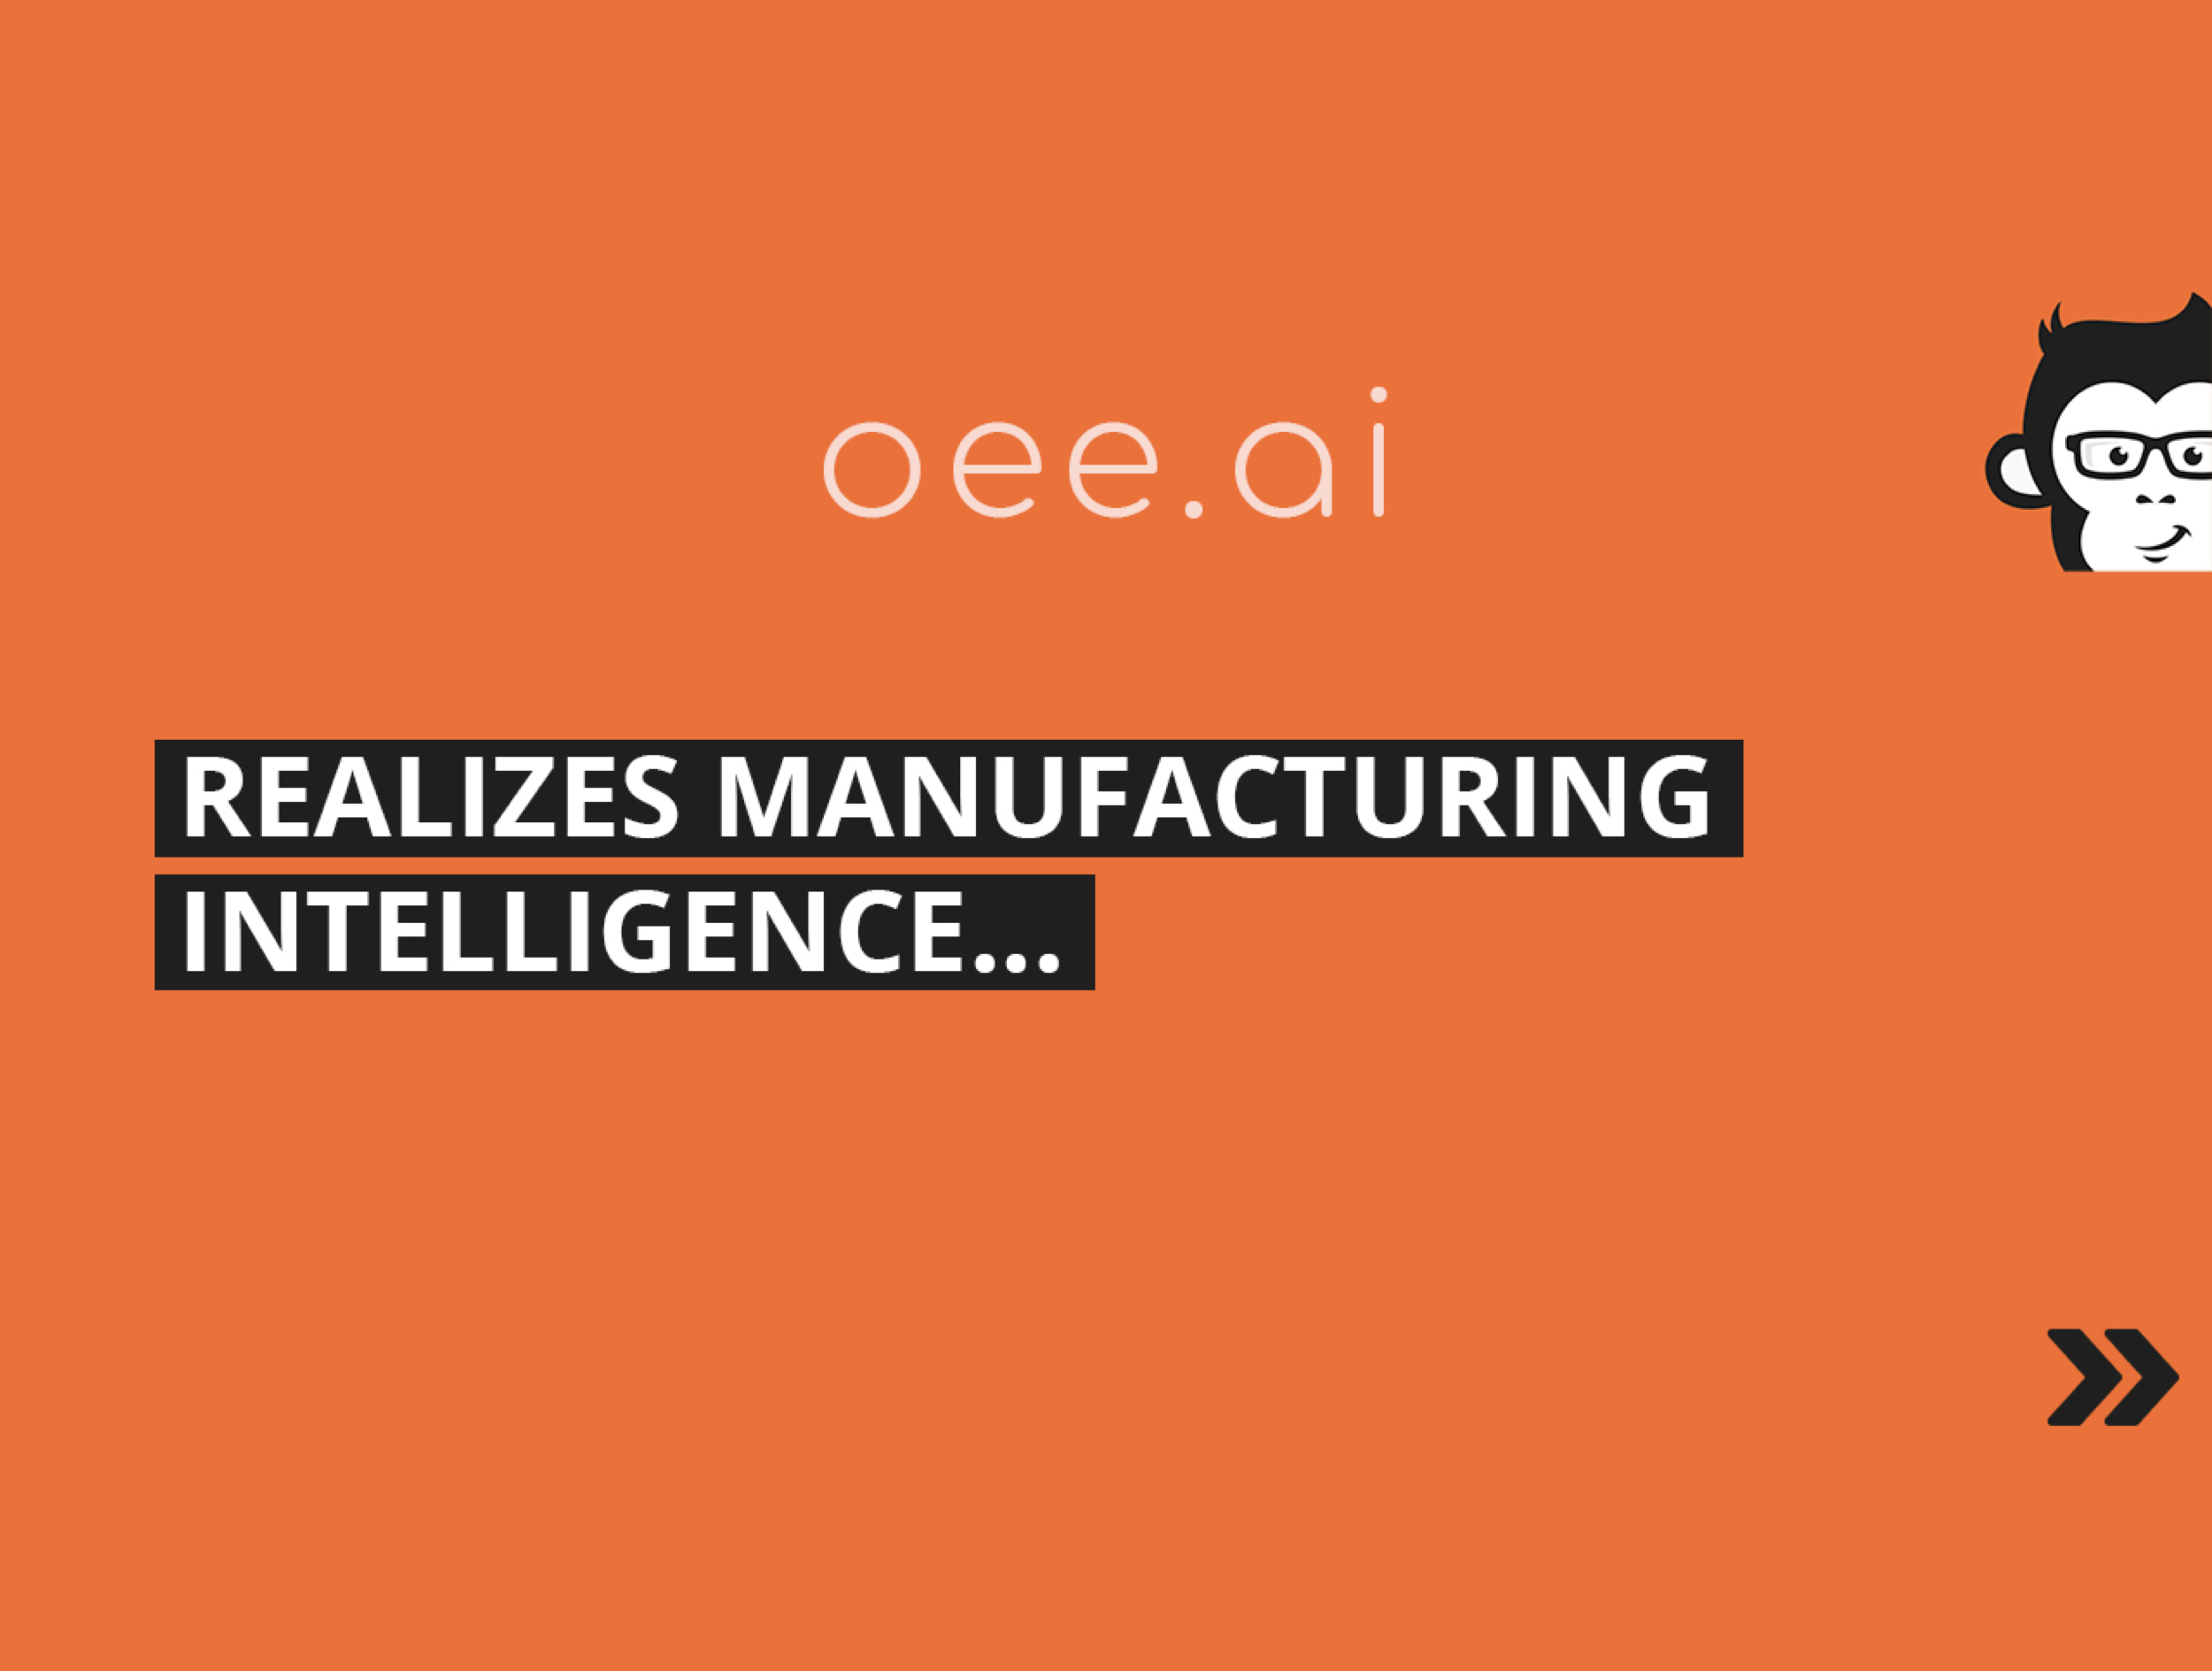 oee.ai realizes manufacturing intelligence